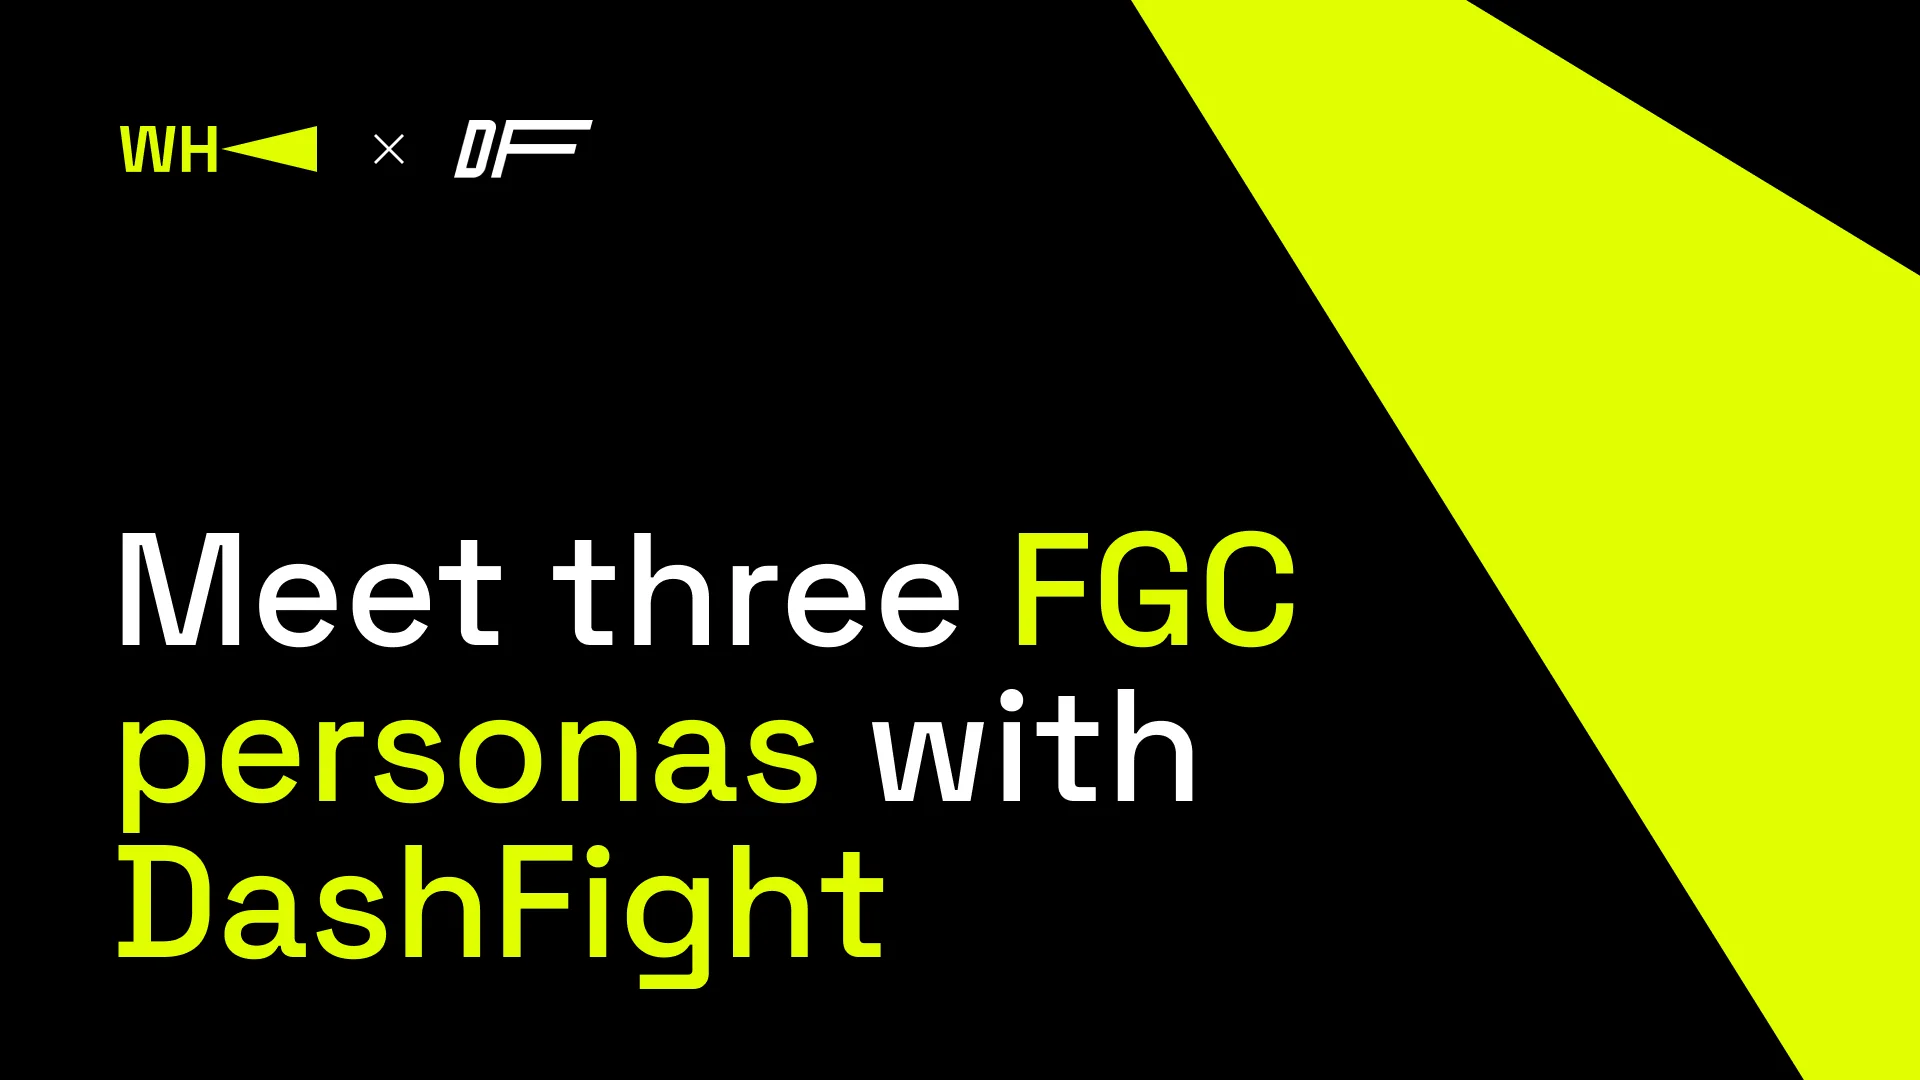 Meet three FGC personas with DashFight